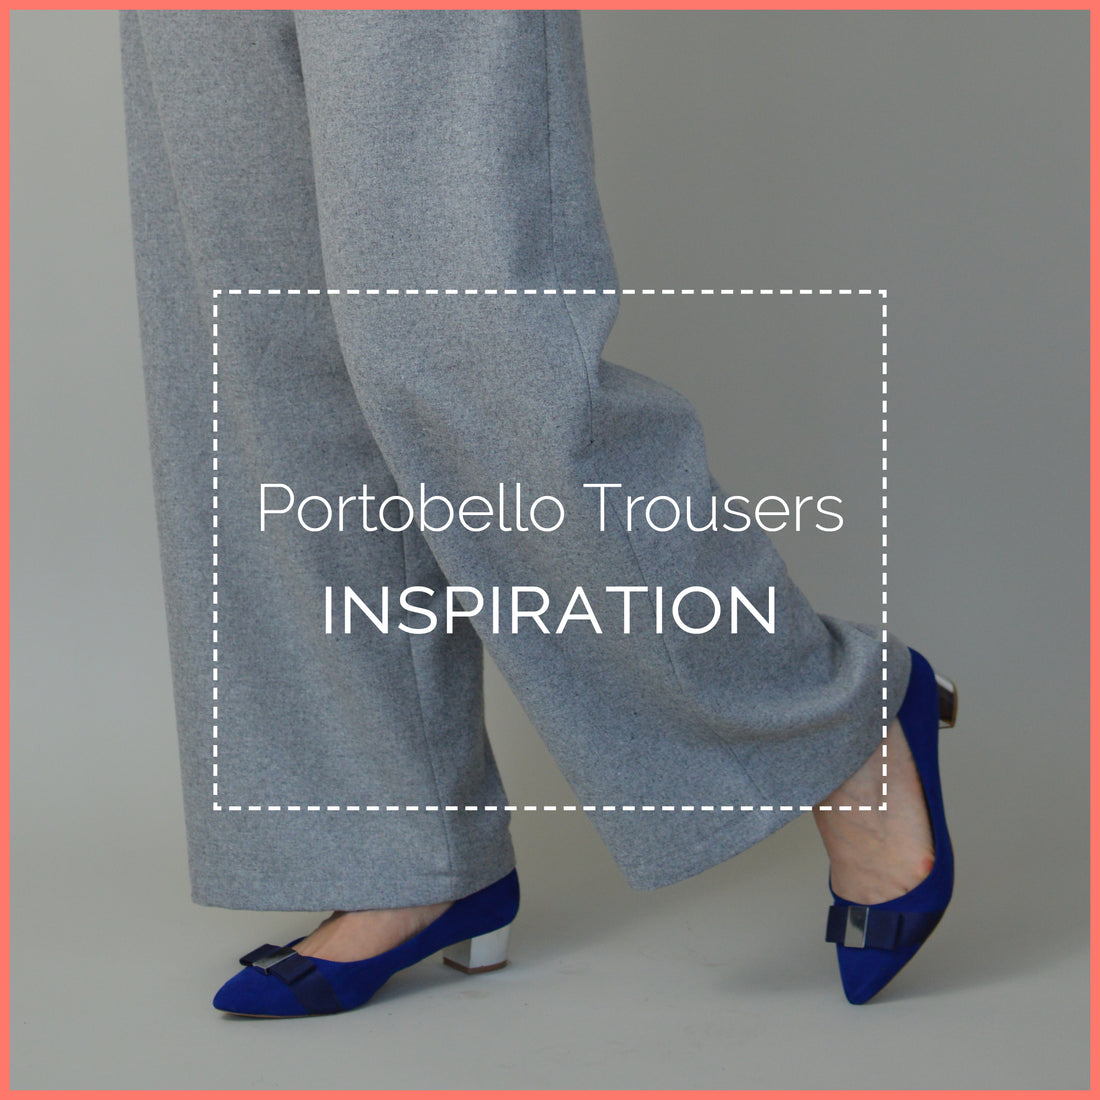 Portobello Trouser pattern inspiration